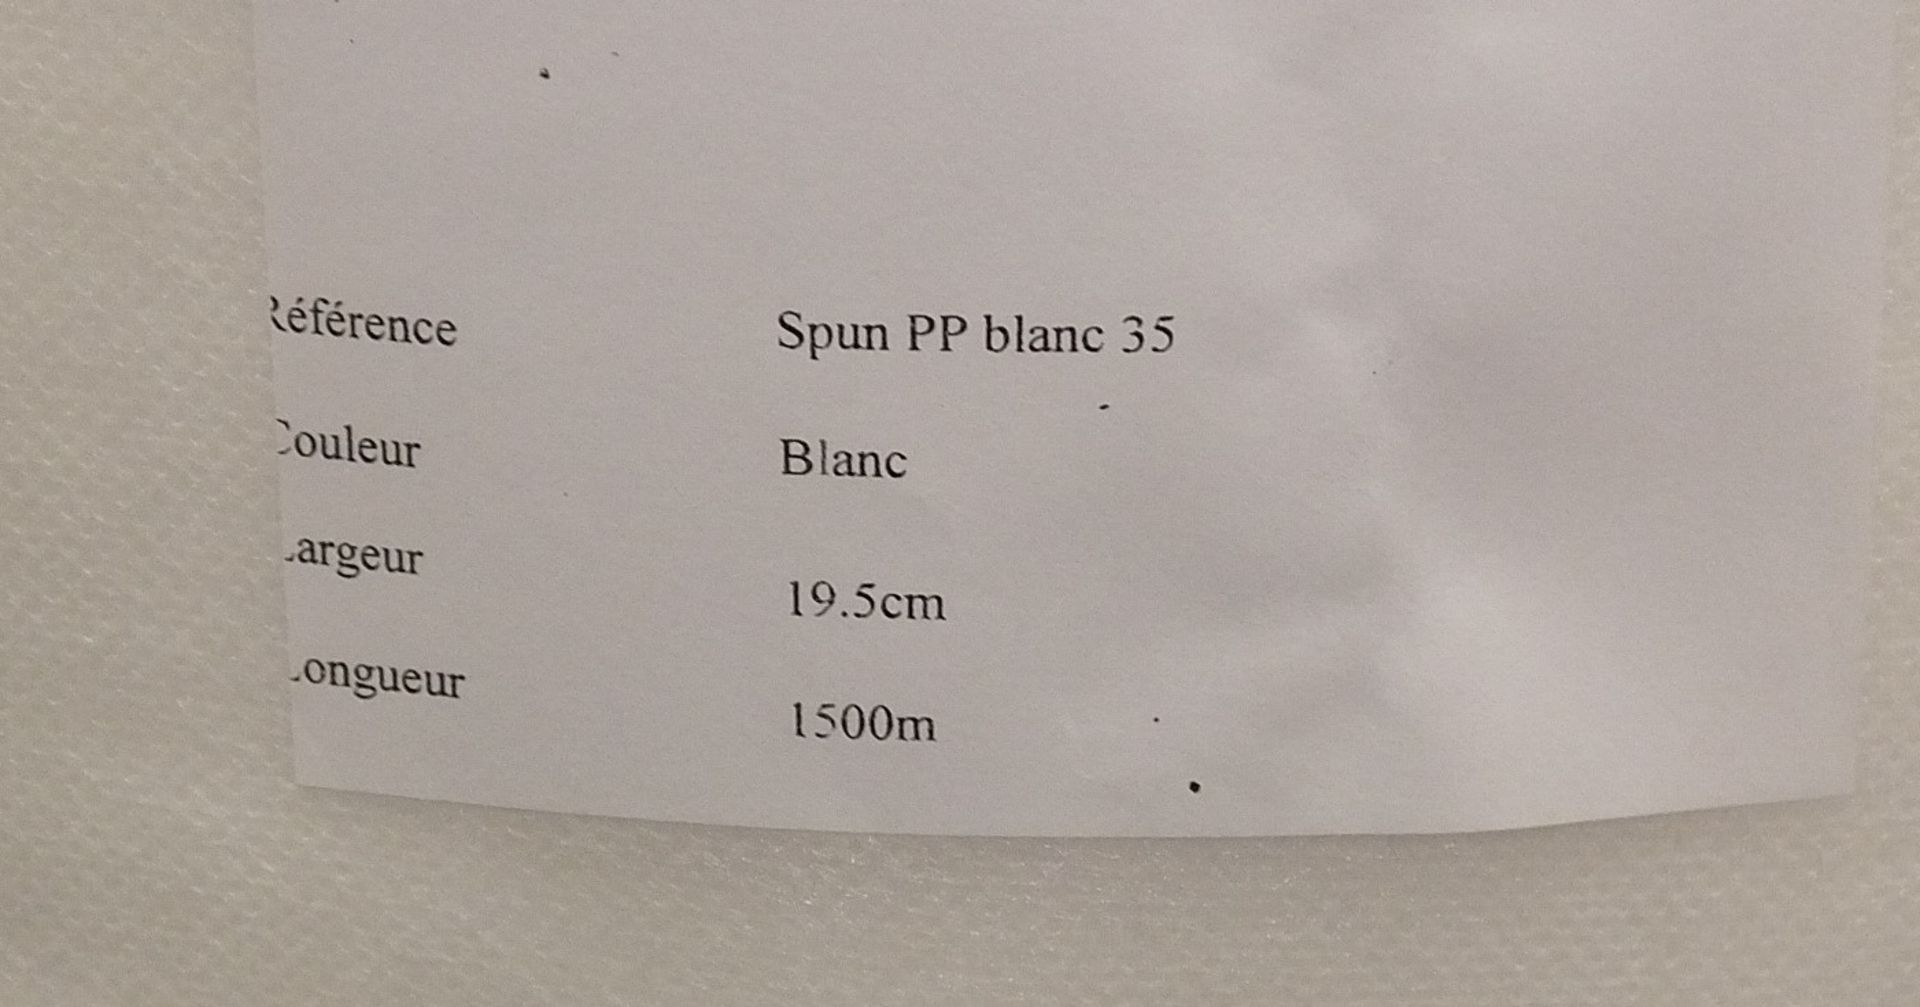 37x Rolls of Spun Polypropylene Nonwoven White 35 gram Inner Spunbond Fabric - 19.5cm x 1500m - Image 3 of 4